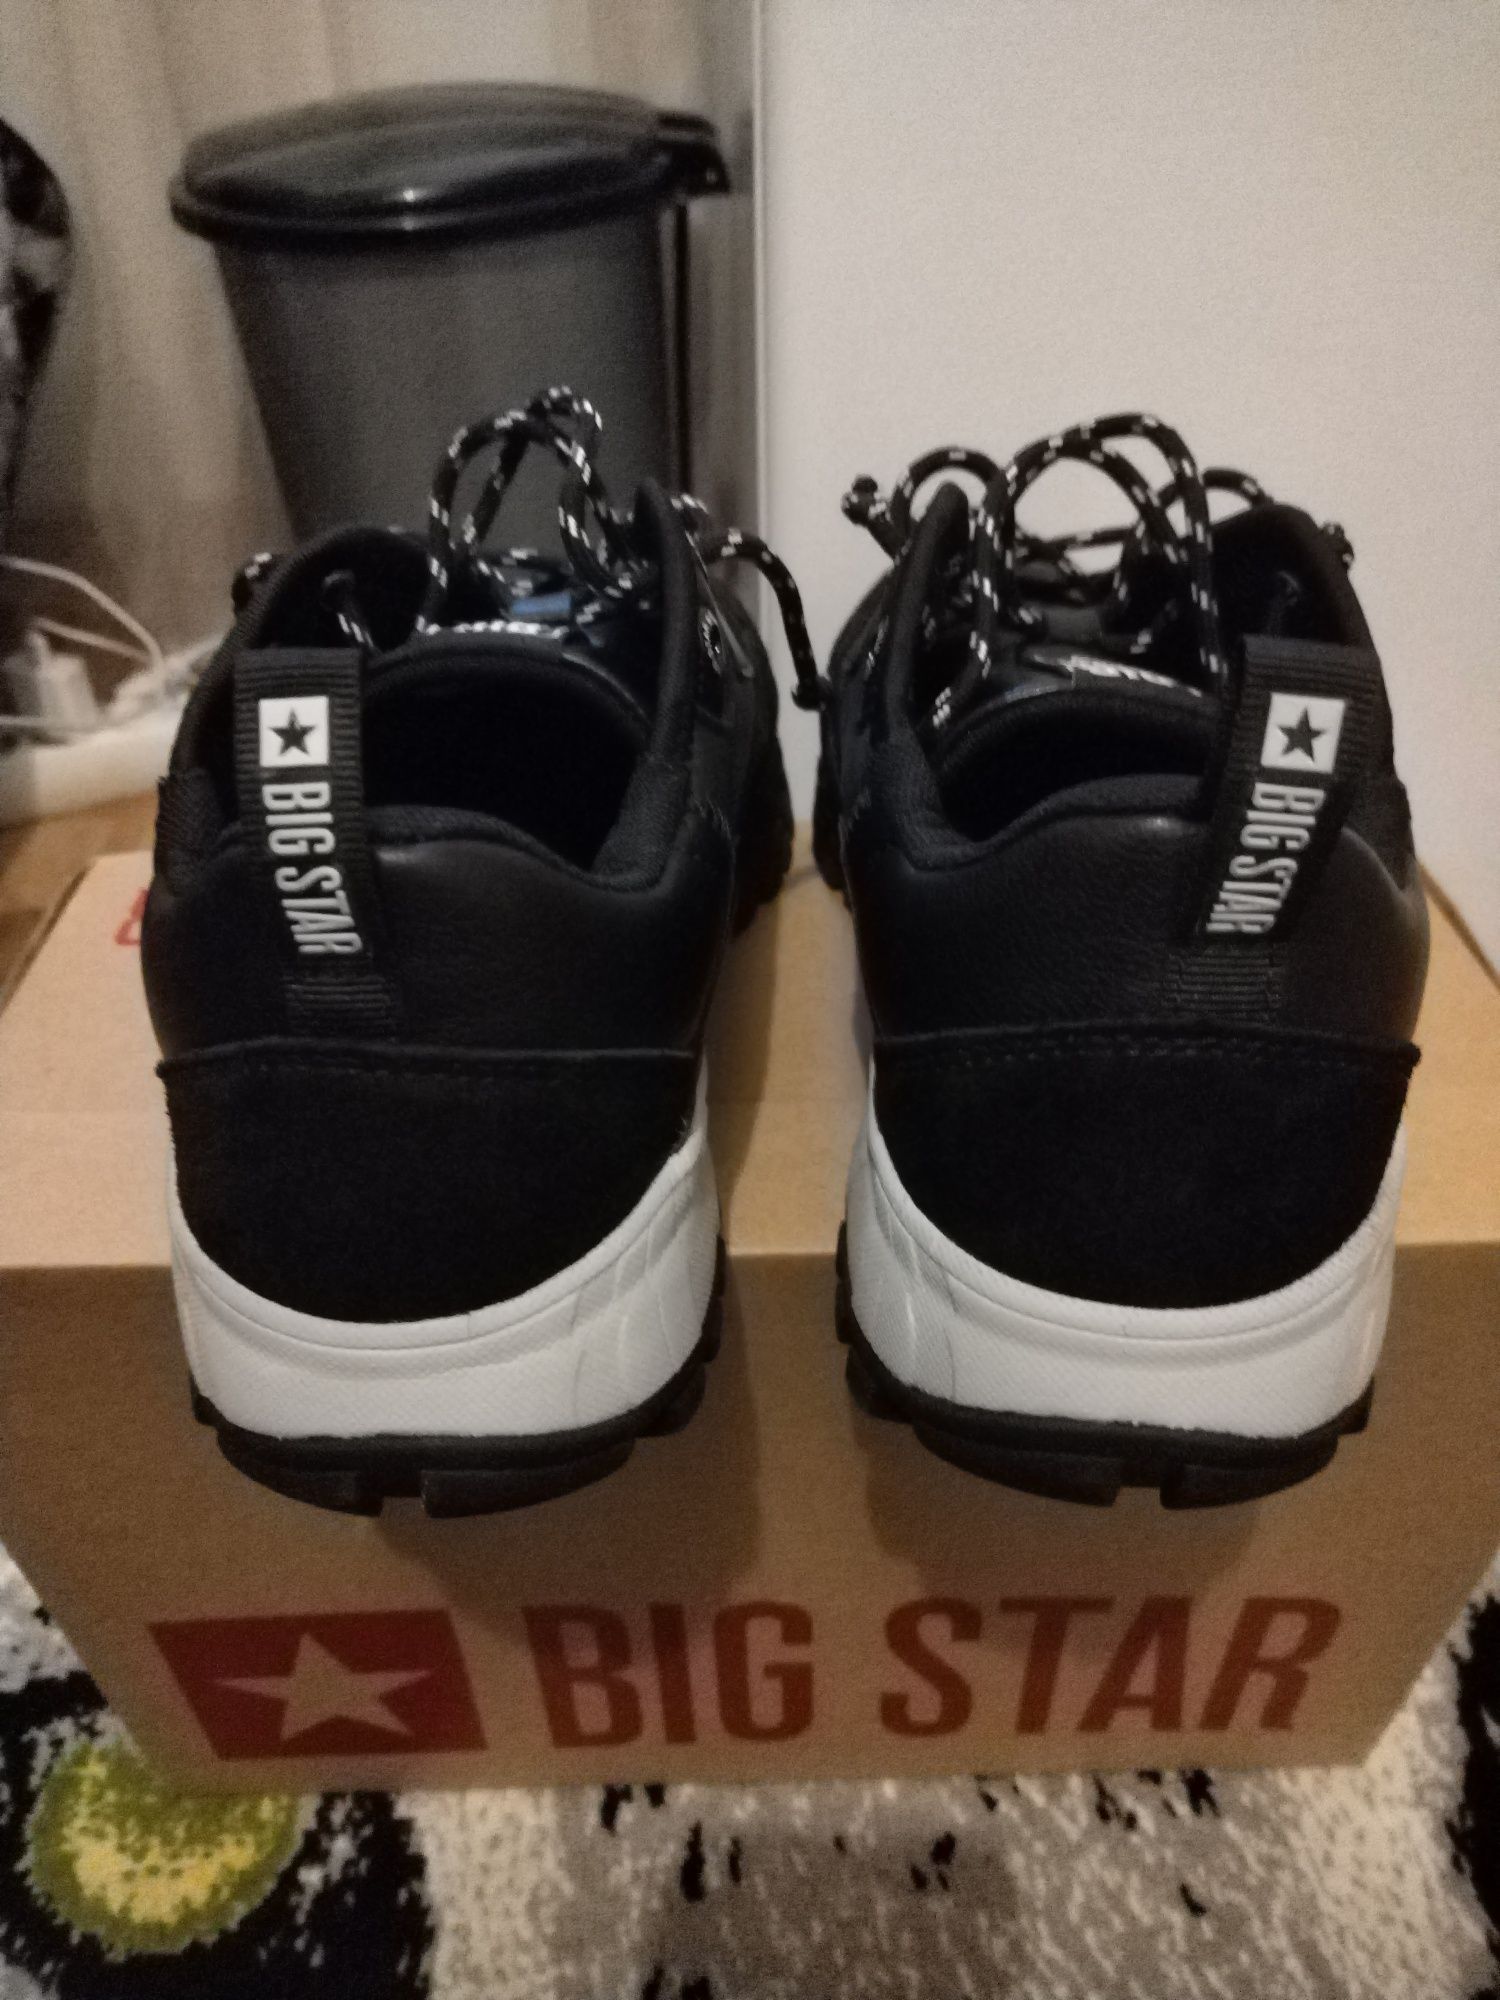 Pantofi sport, BiG STAR